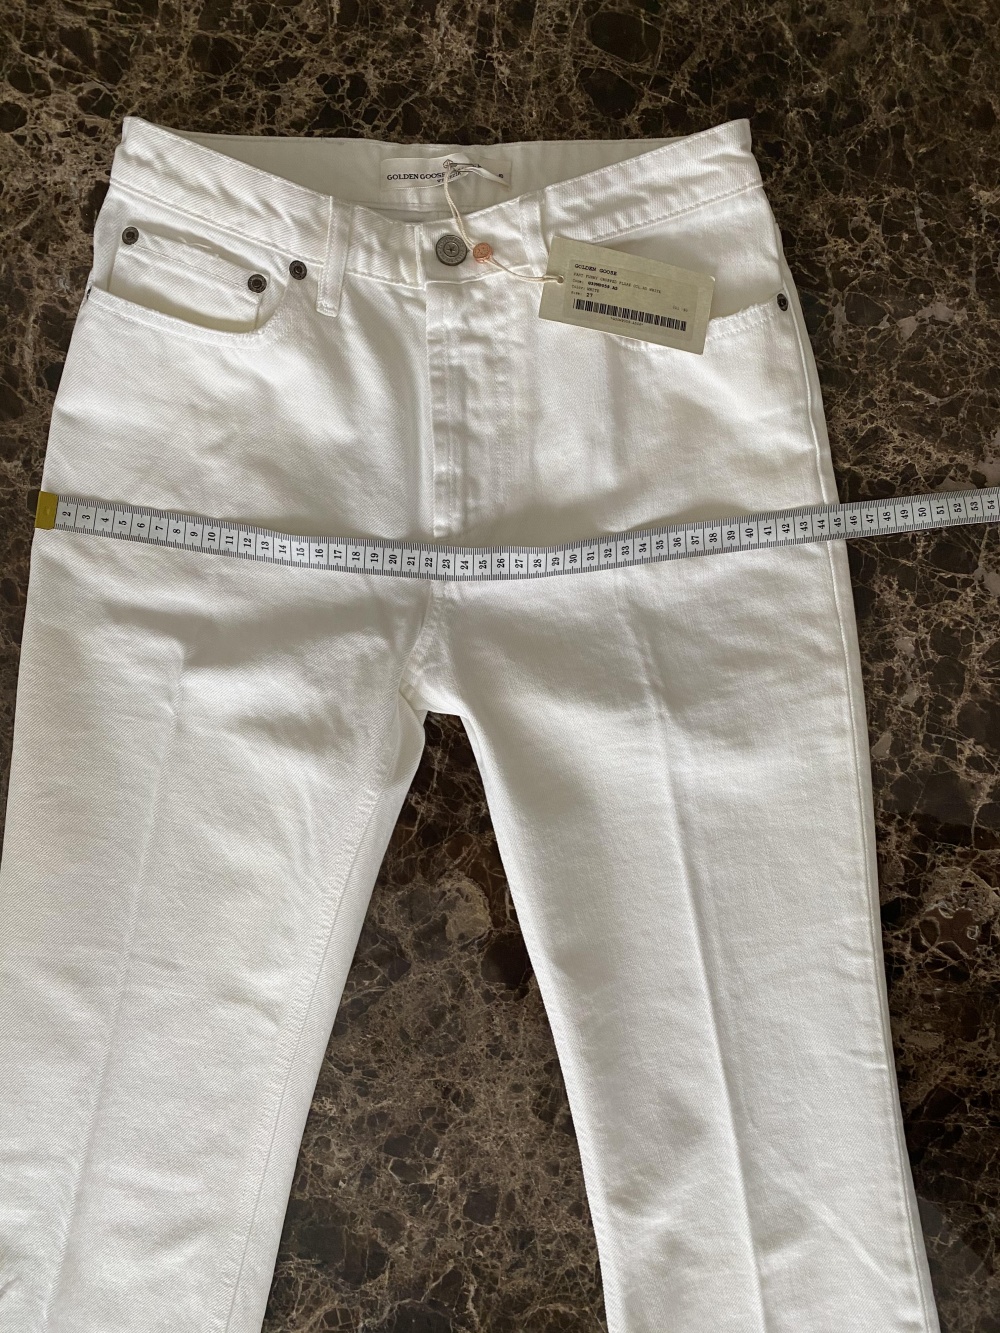 Белые джинсы Golden Goose Deluxe Brand 27 размер (маломерят)